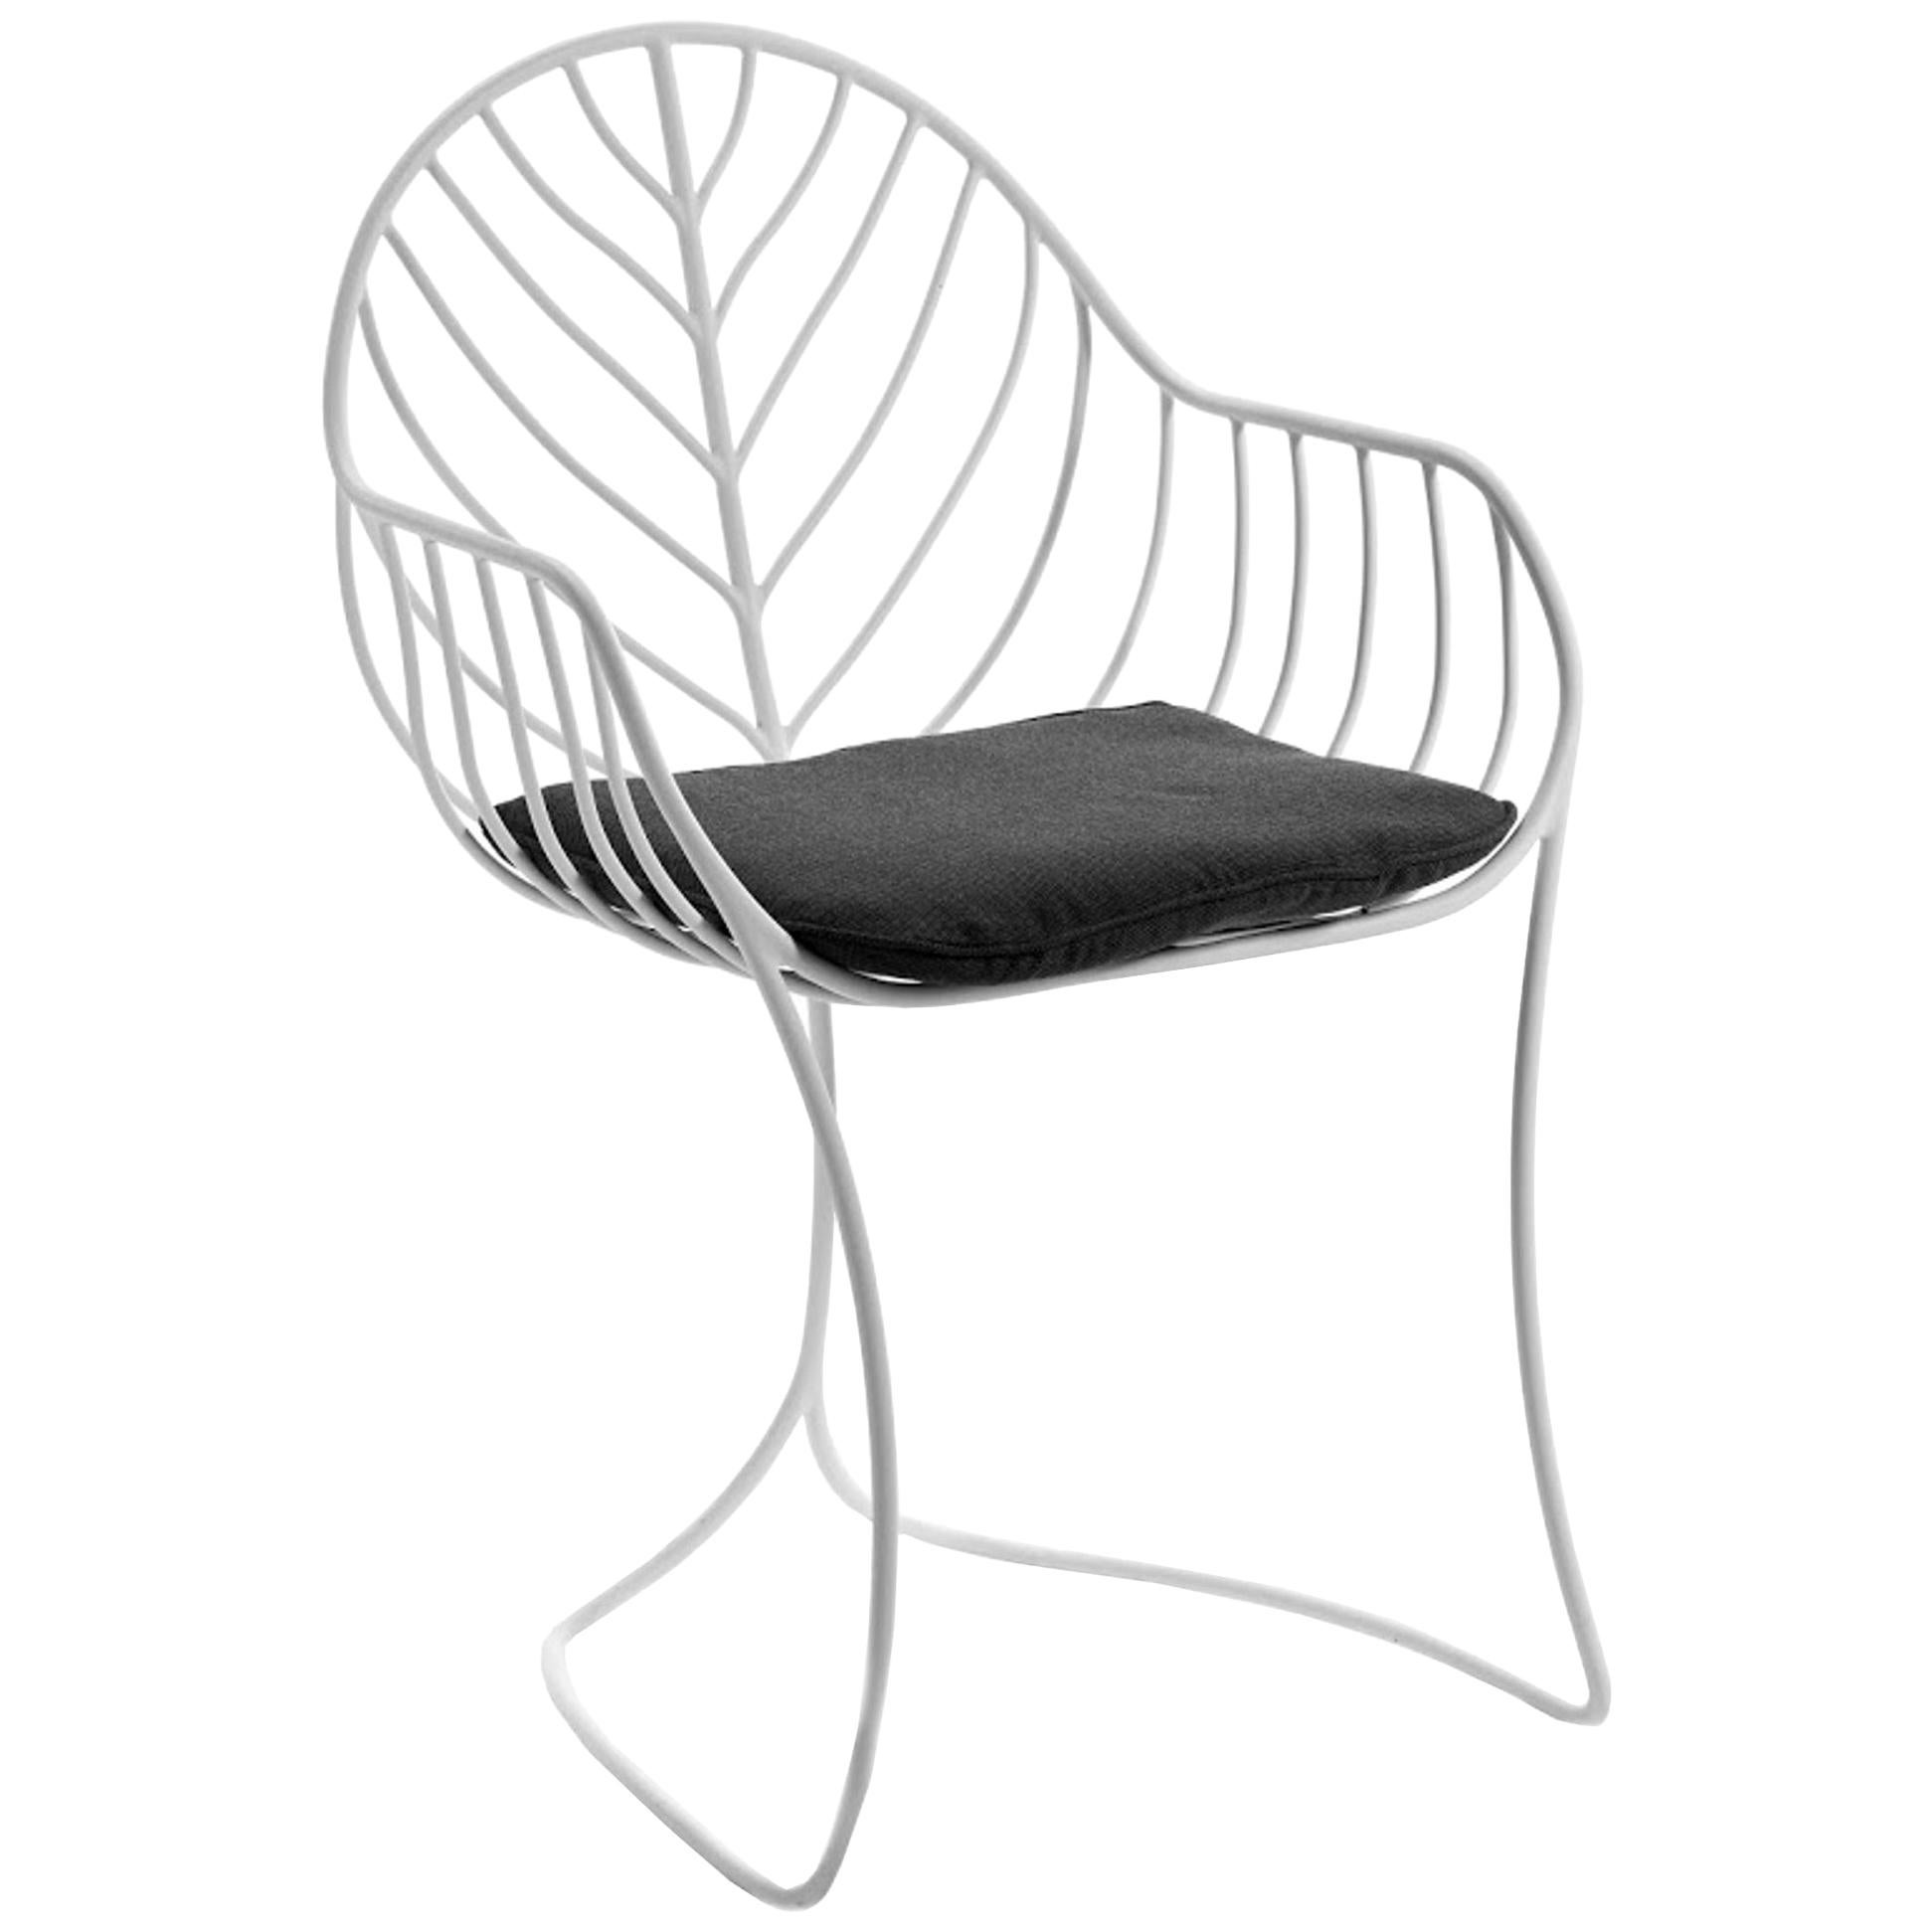 Outdoor Folia Sessel von Royal Botania entworfen von Kris Van Puyvelde